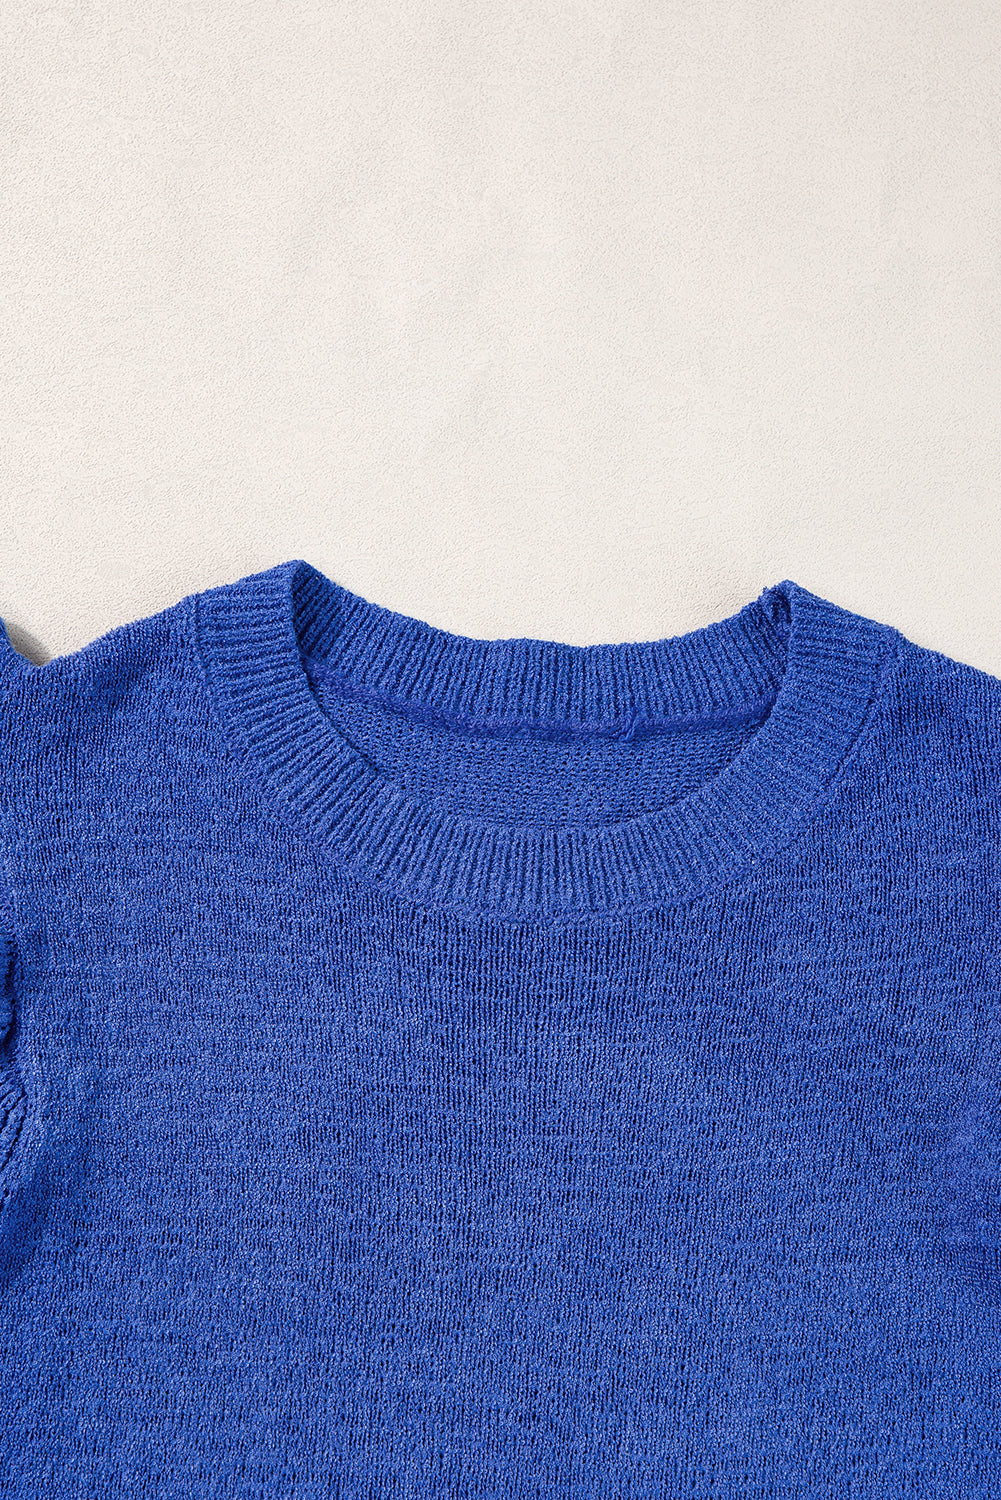 Dark Blue Ruffle Sleeve Knitted Sweater Top